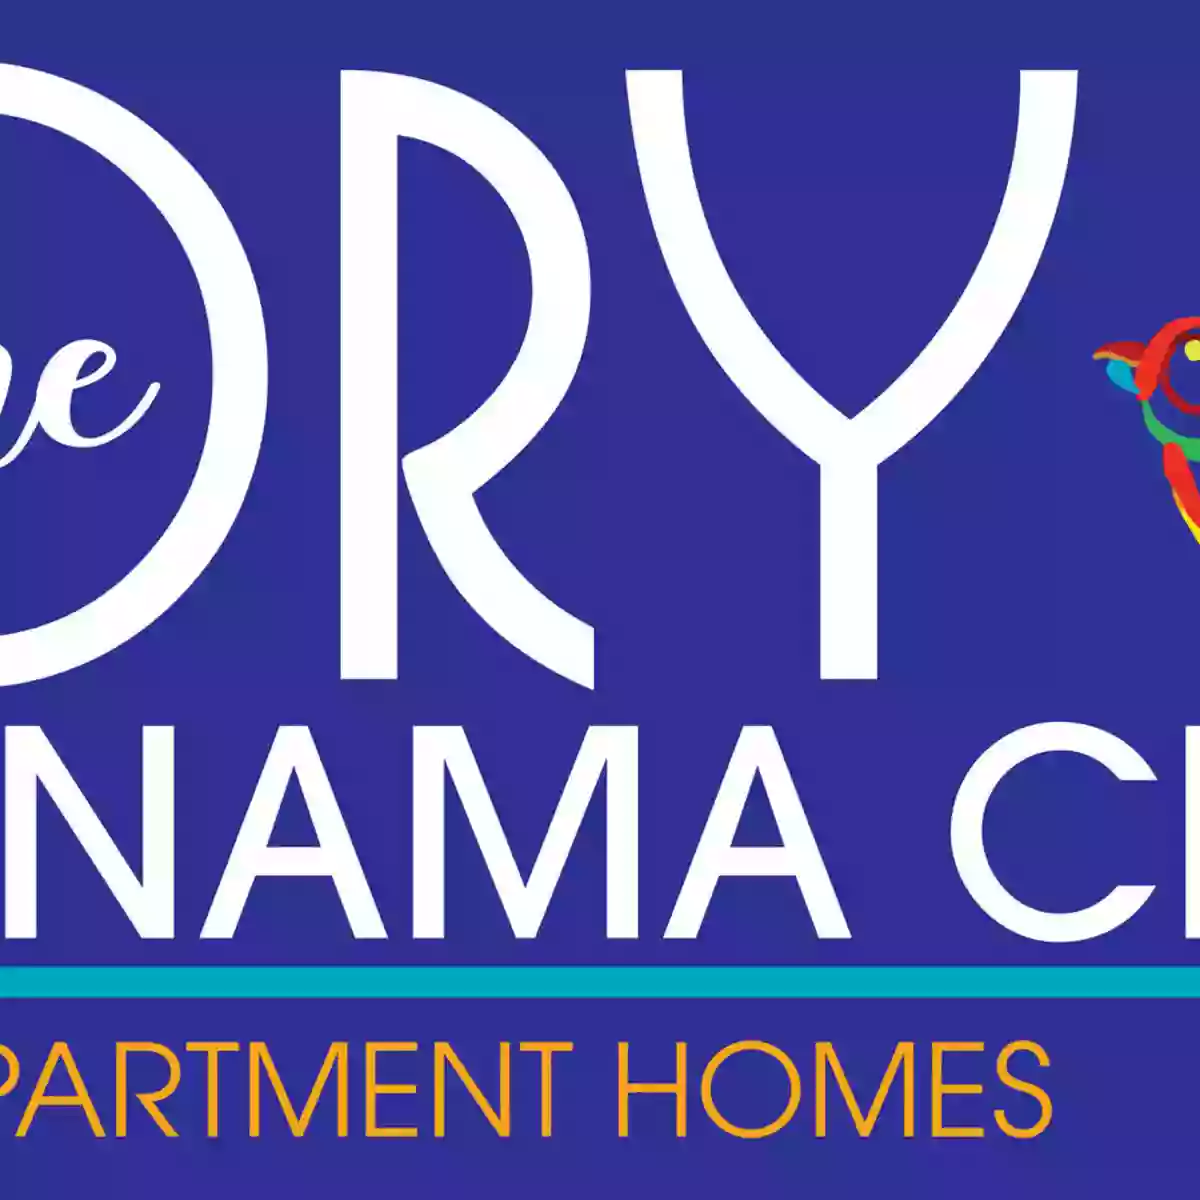 The Lory of Panama City